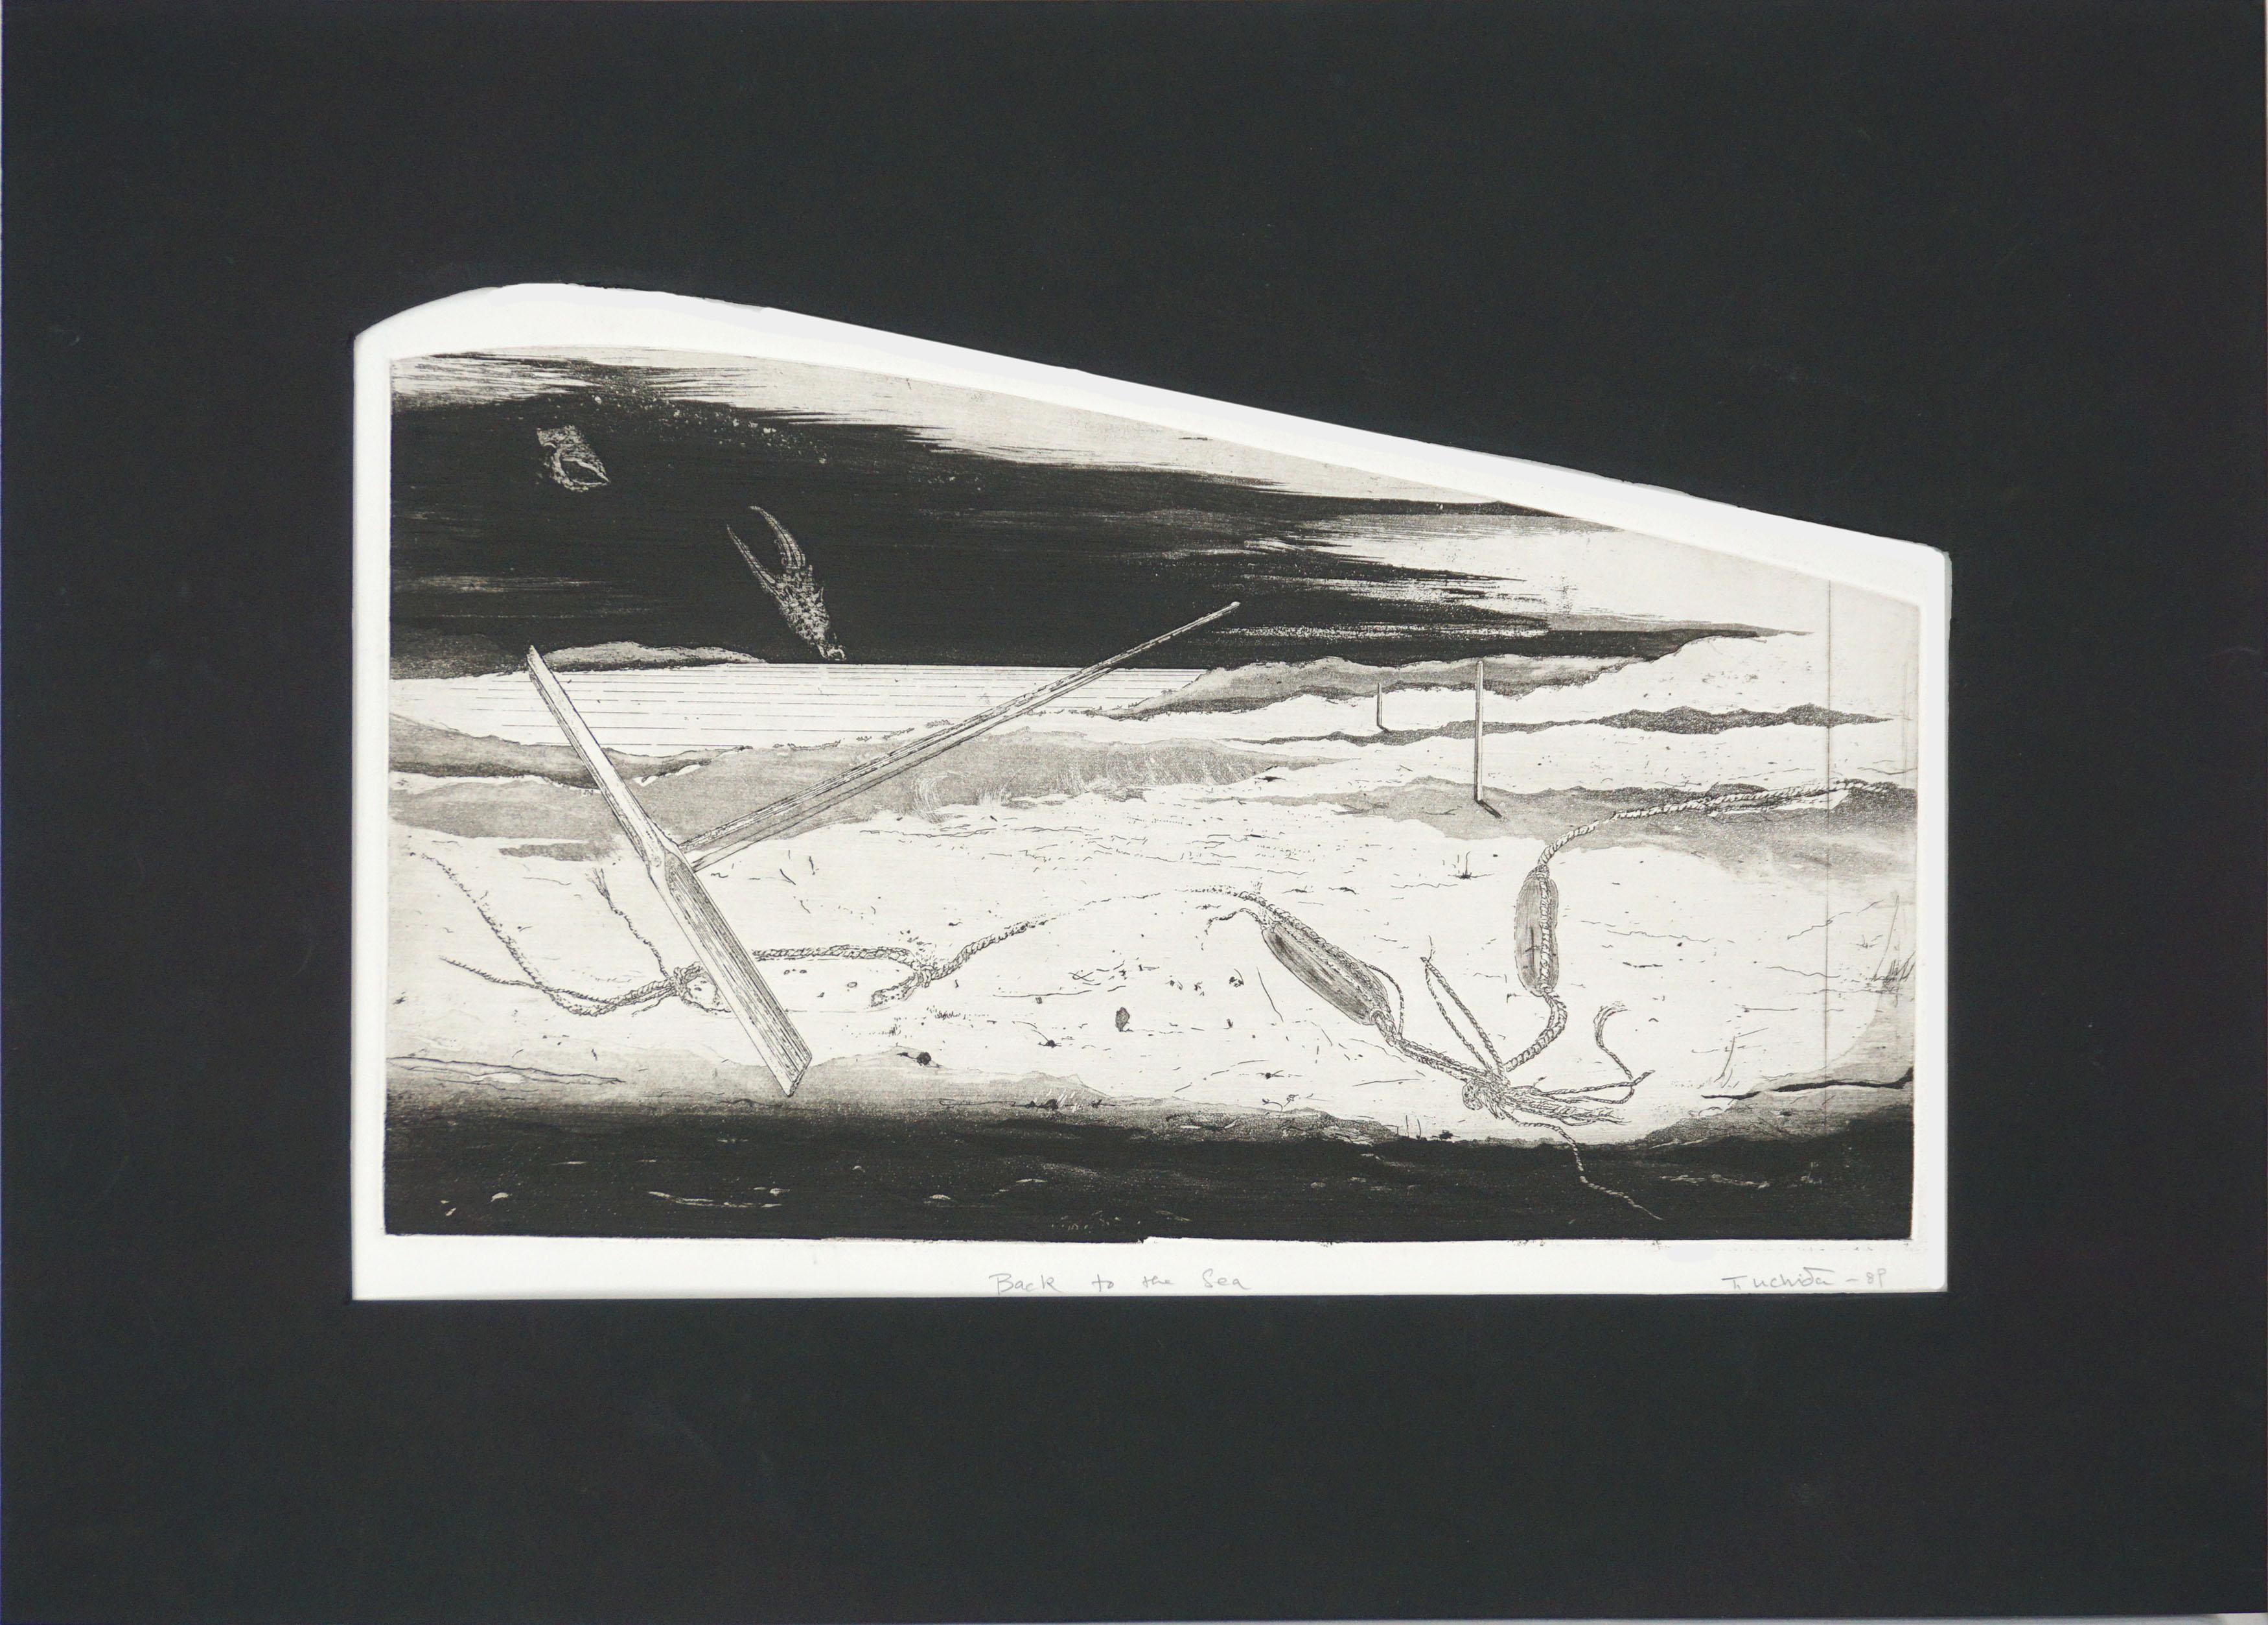 Tomoya Uchida Still-Life Print - "Back to the Sea"  - Intaglio Print